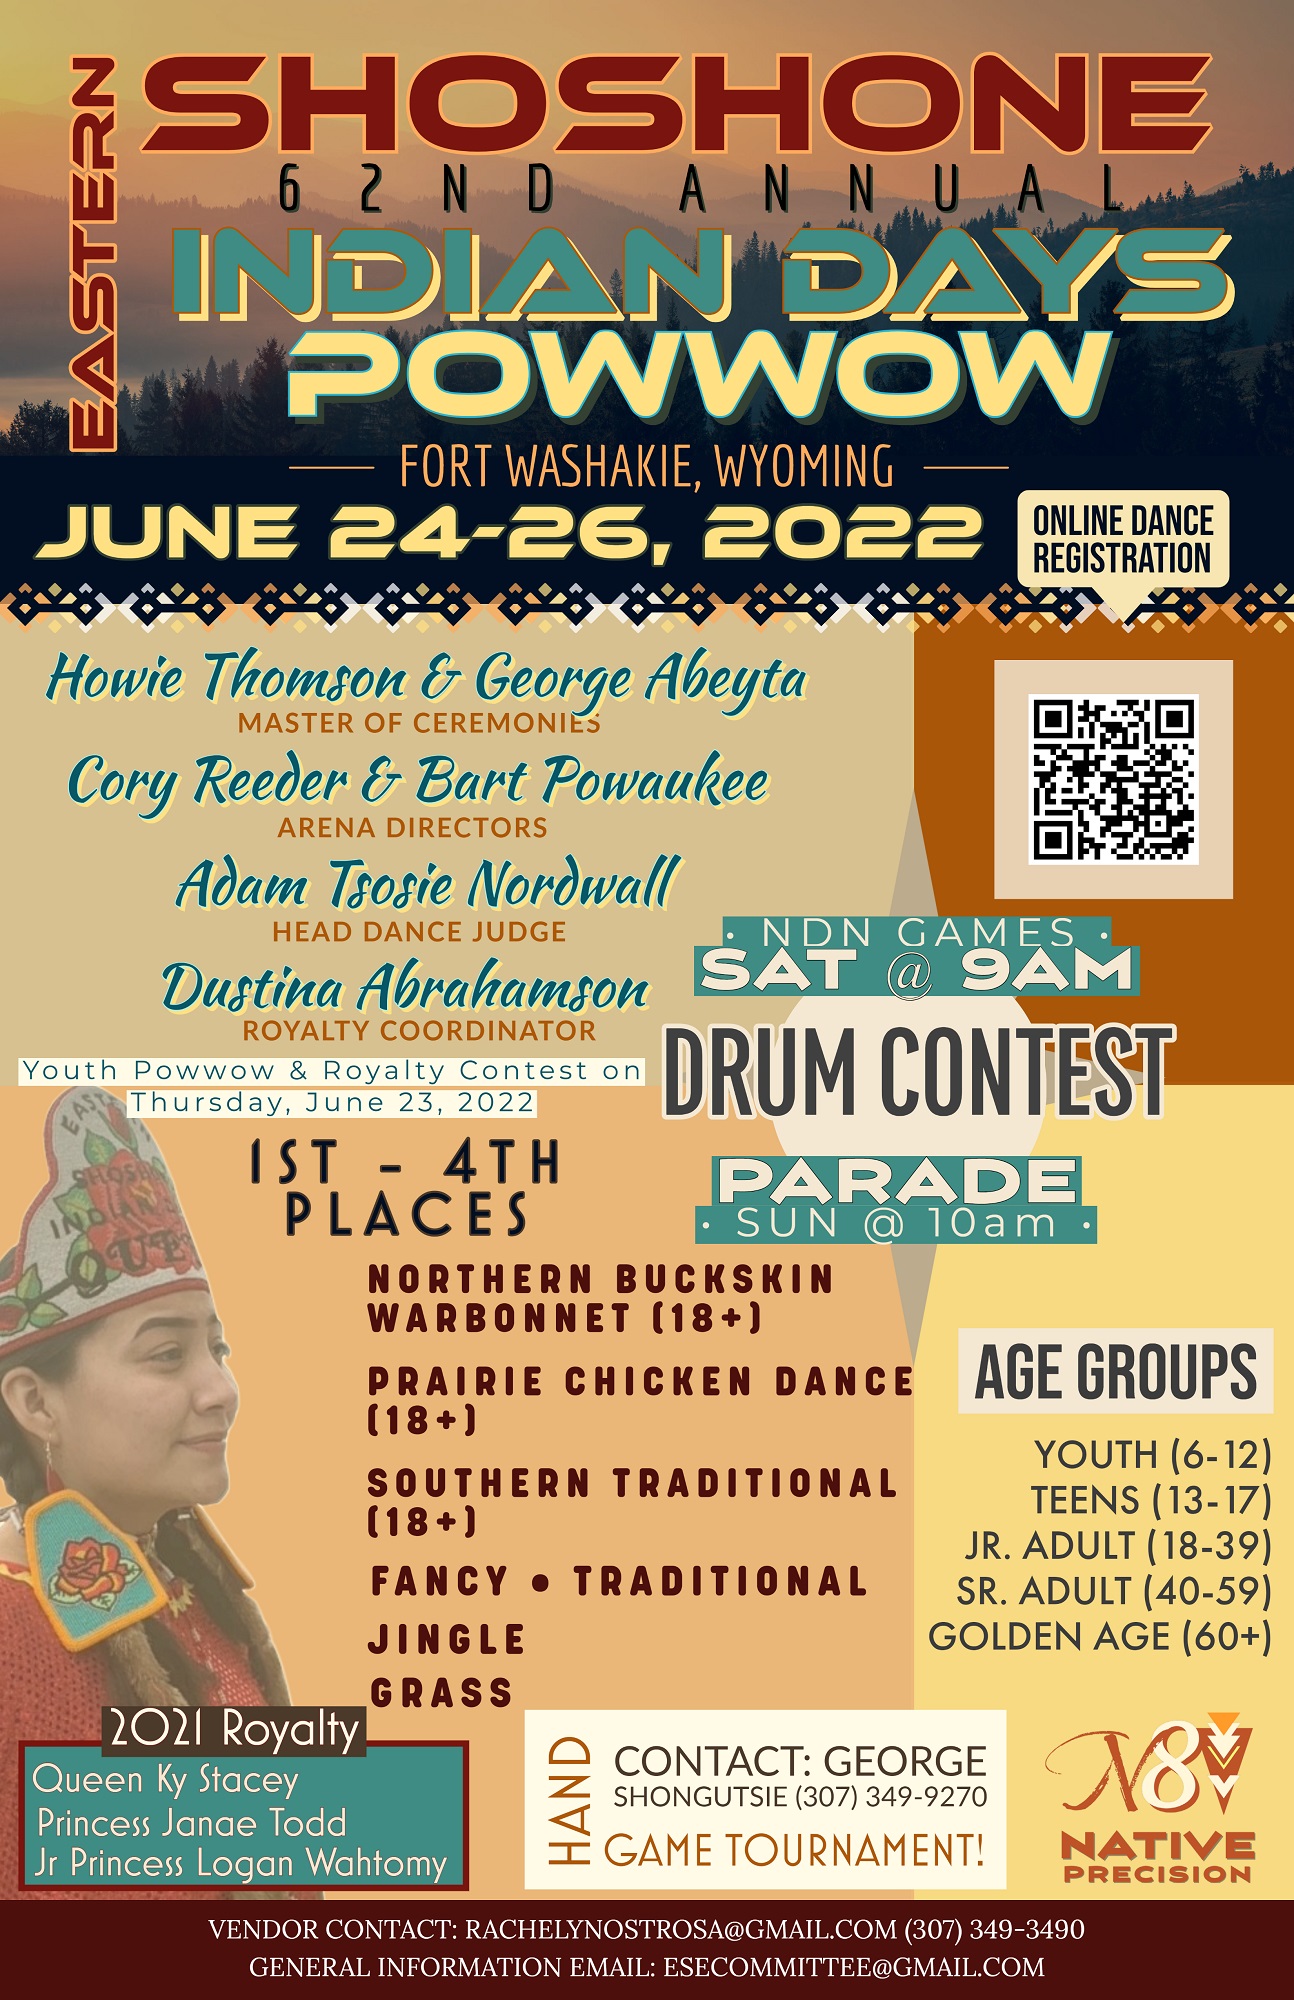 Eastern Shoshone India Days Powwow